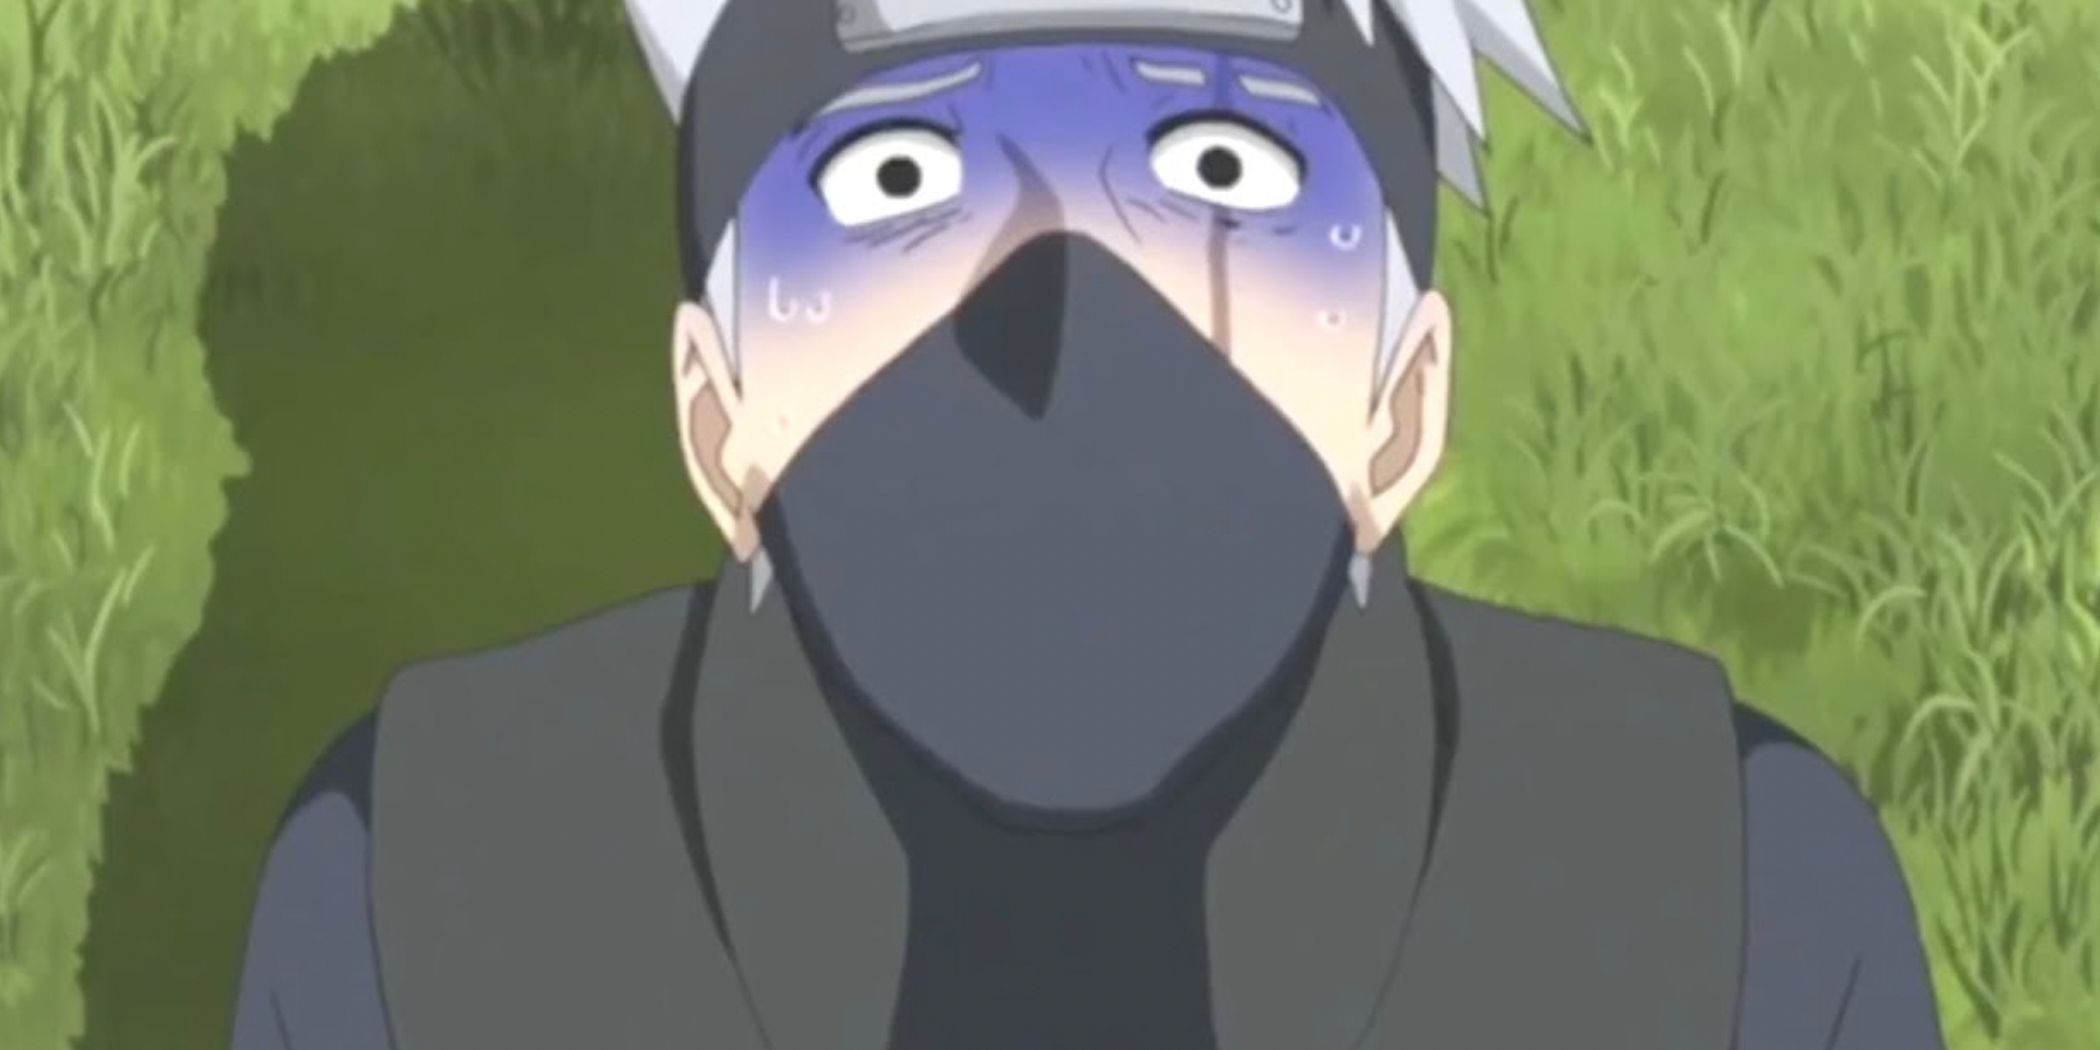 Kakashi sweats while contemplating wedding gifts in Naruto Shippuden